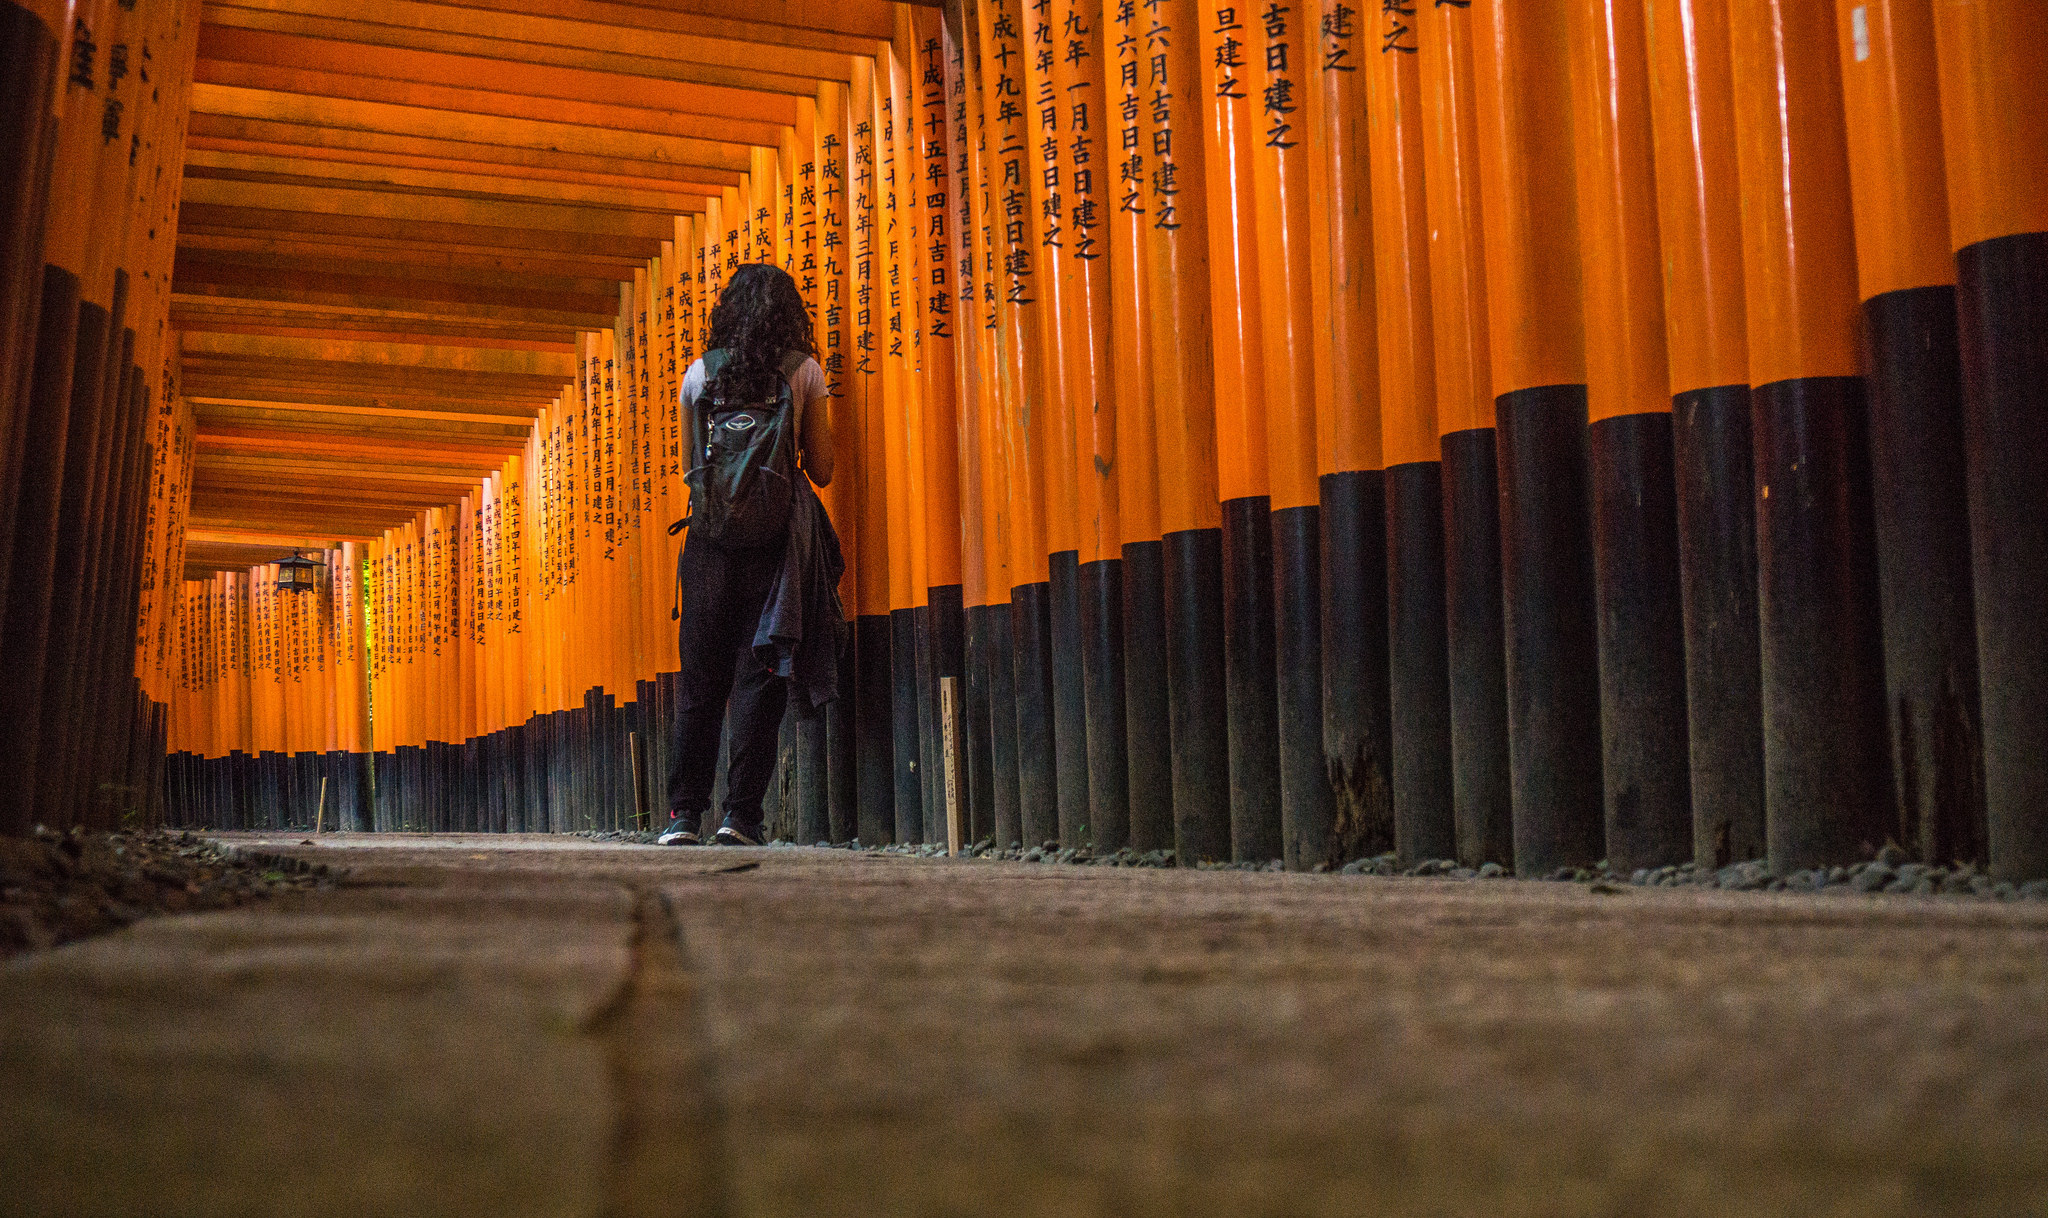 Torrii gates galore in Kyoto